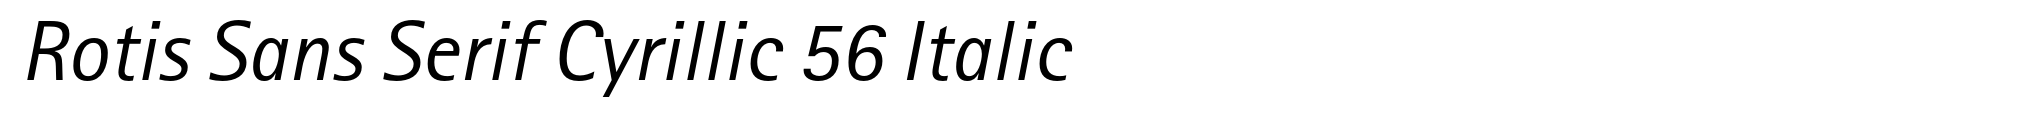 Rotis Sans Serif Cyrillic 56 Italic image